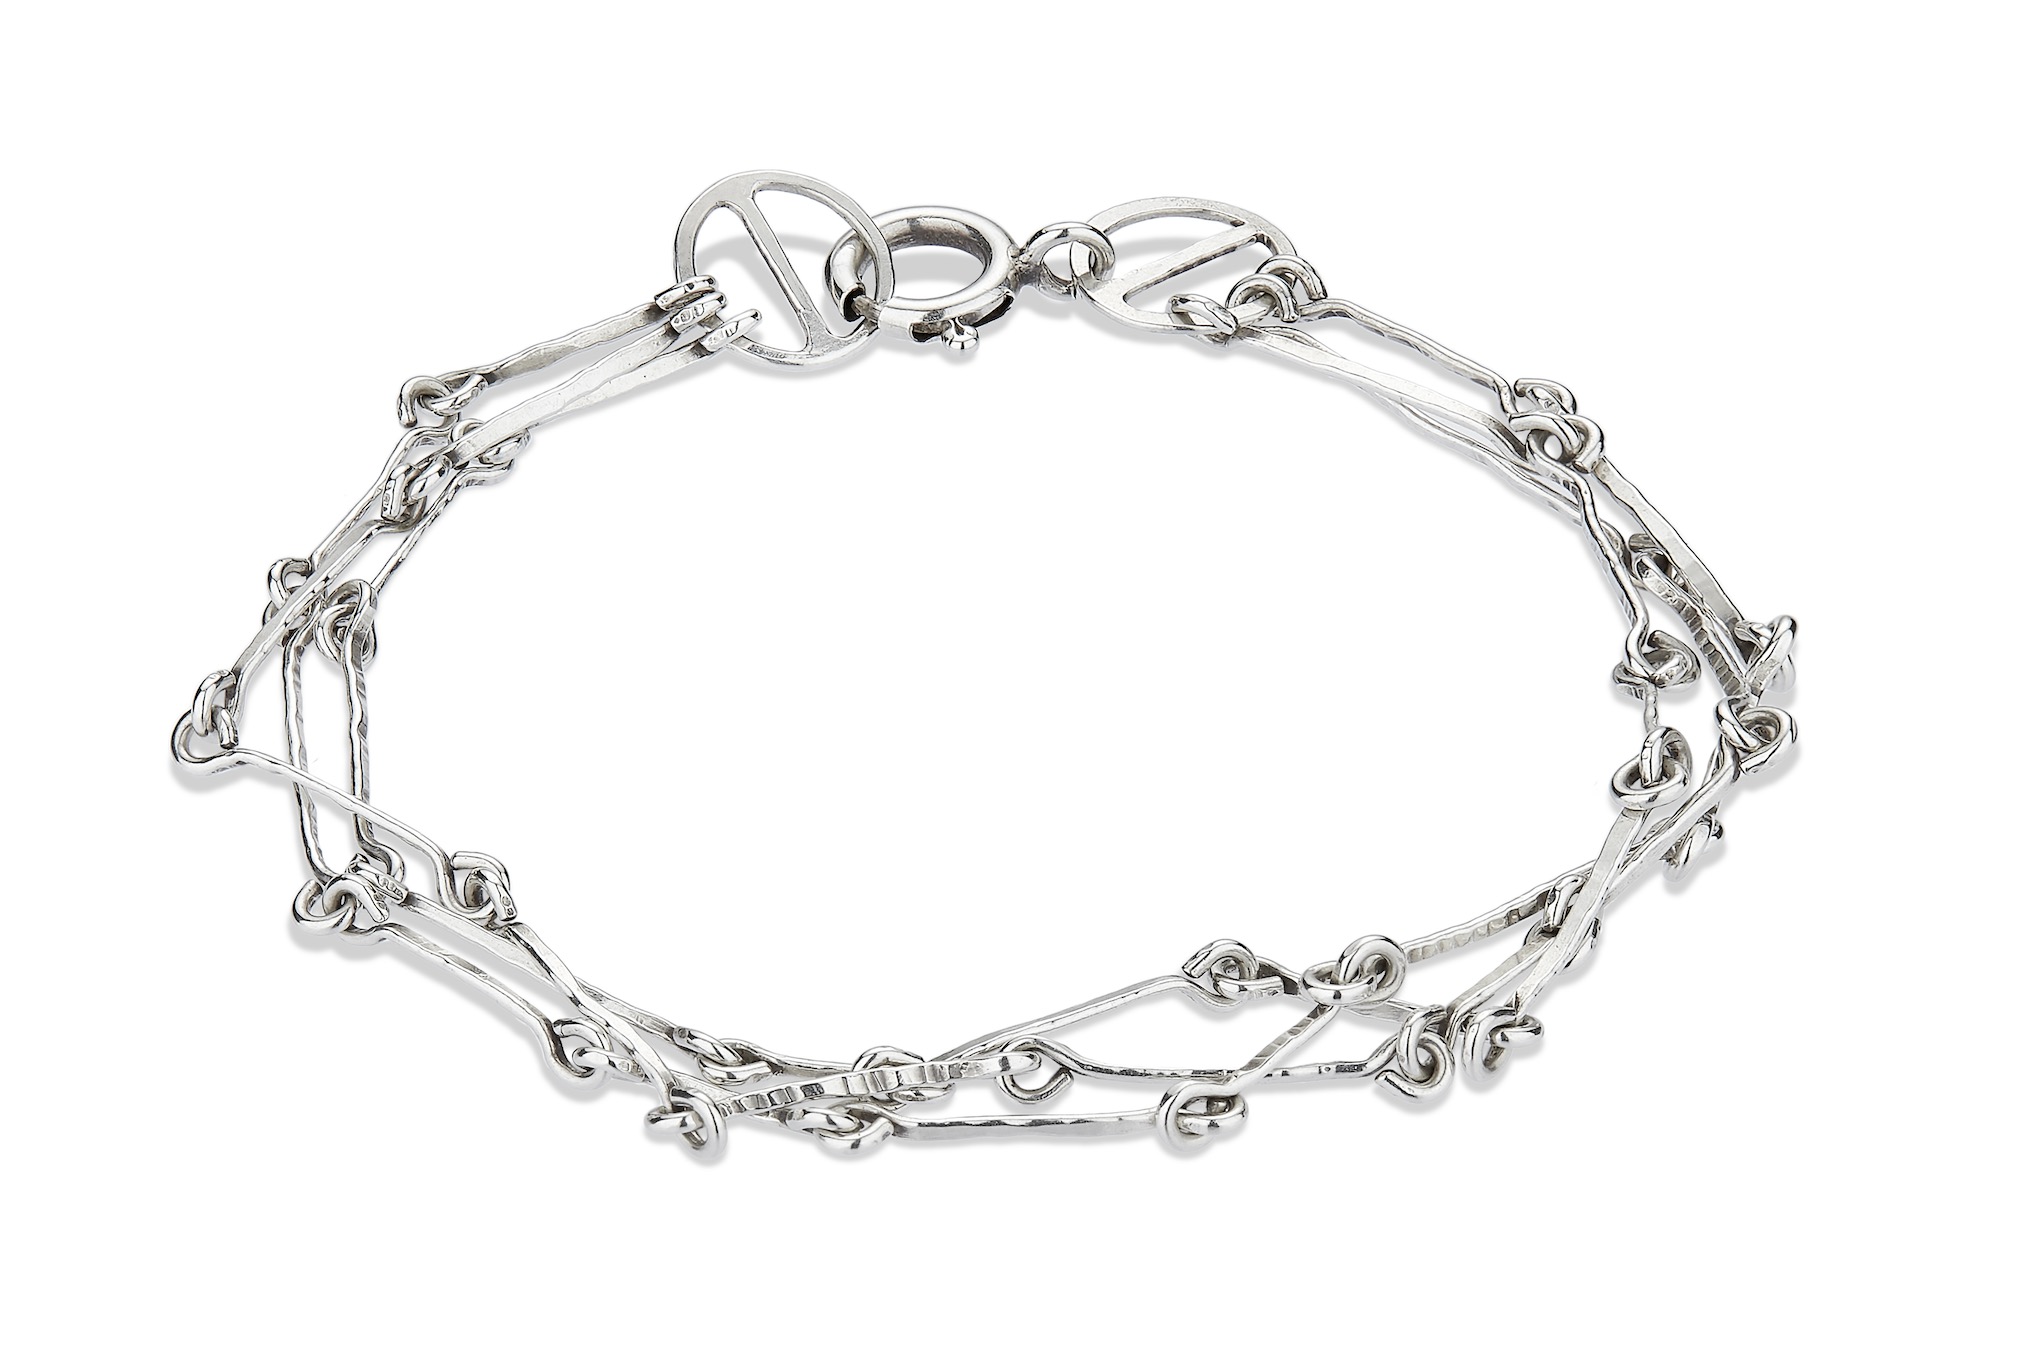 Linked wire bracelet